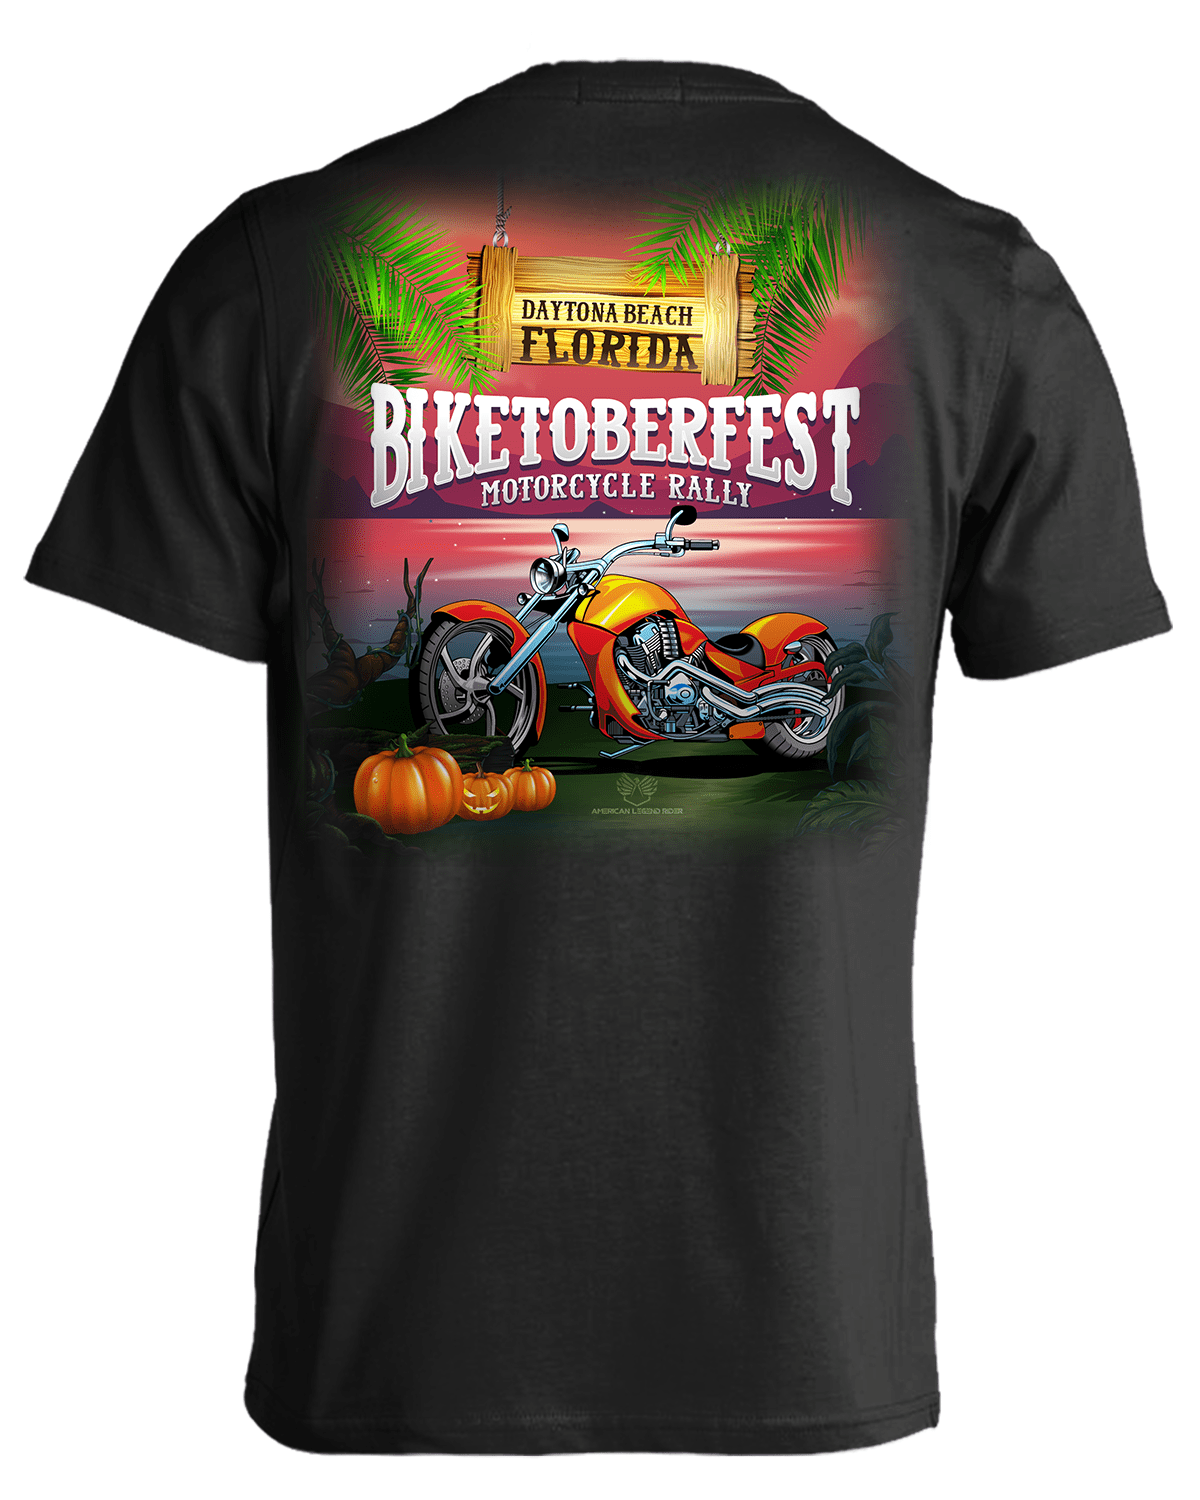 Biketoberfest Men's T-shirt (Black, Cotton, Polyester, S-6XL) - American Legend Rider